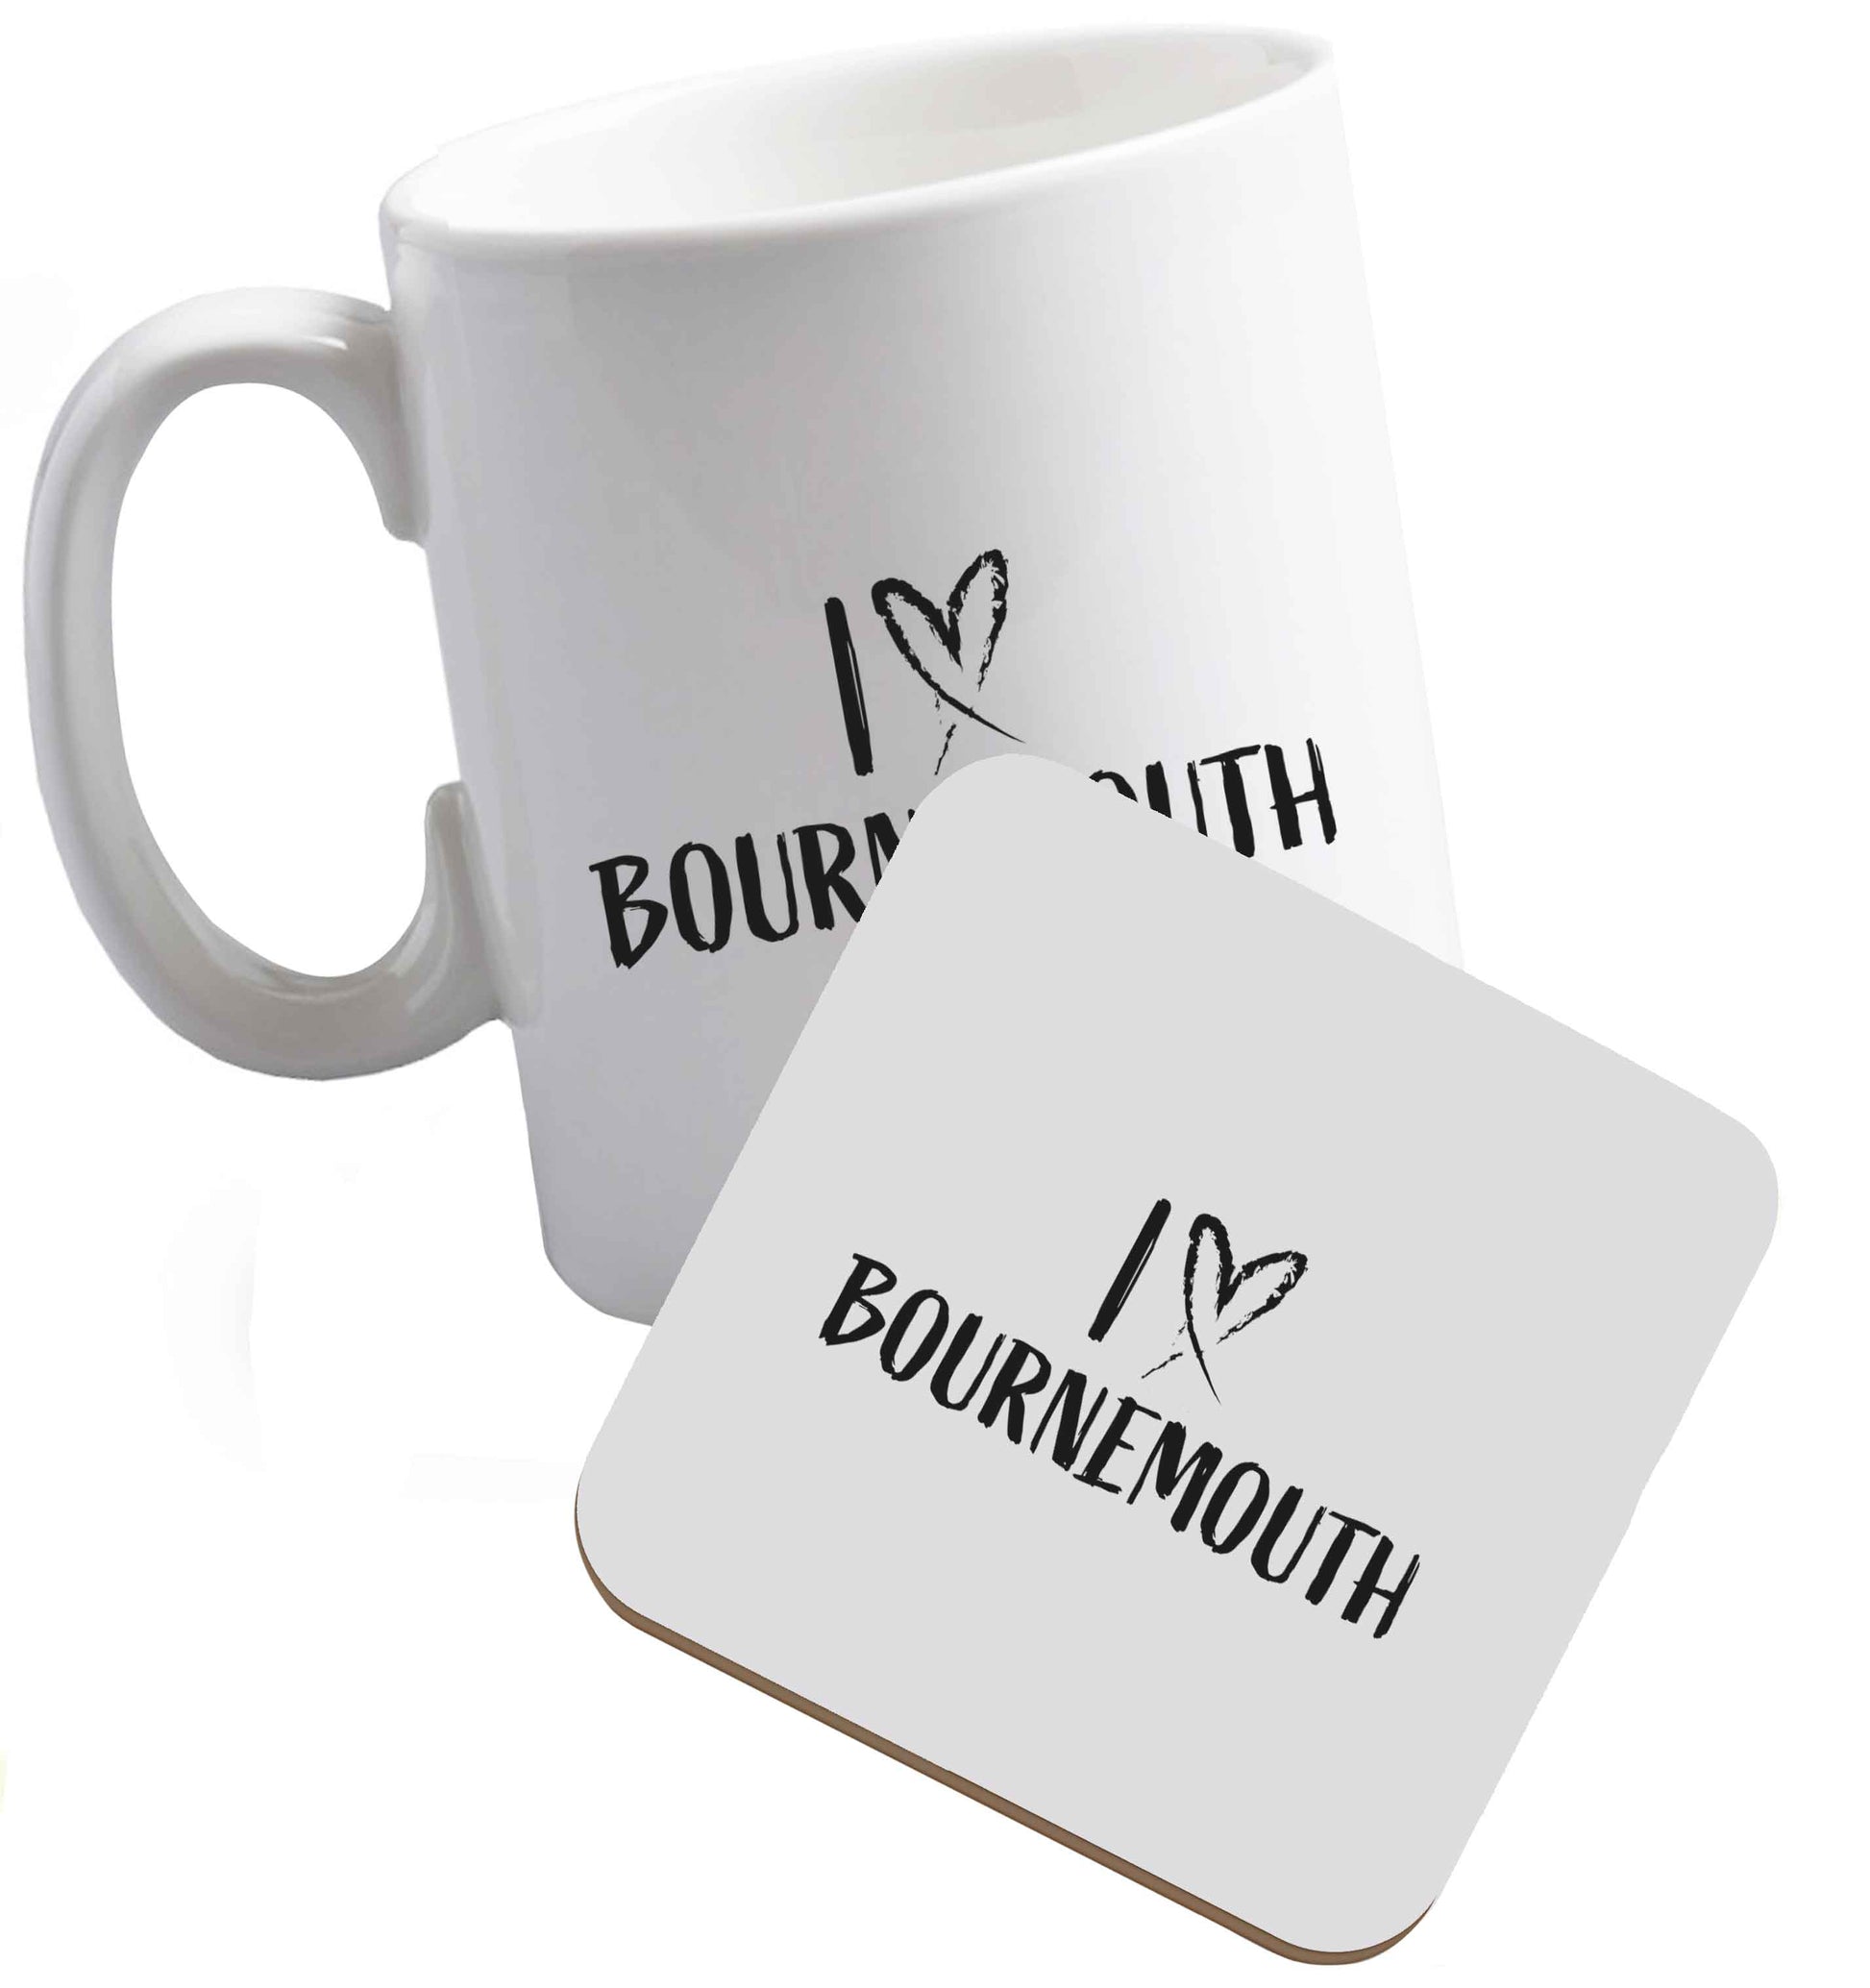 10 oz I love Bournemouth ceramic mug and coaster set right handed